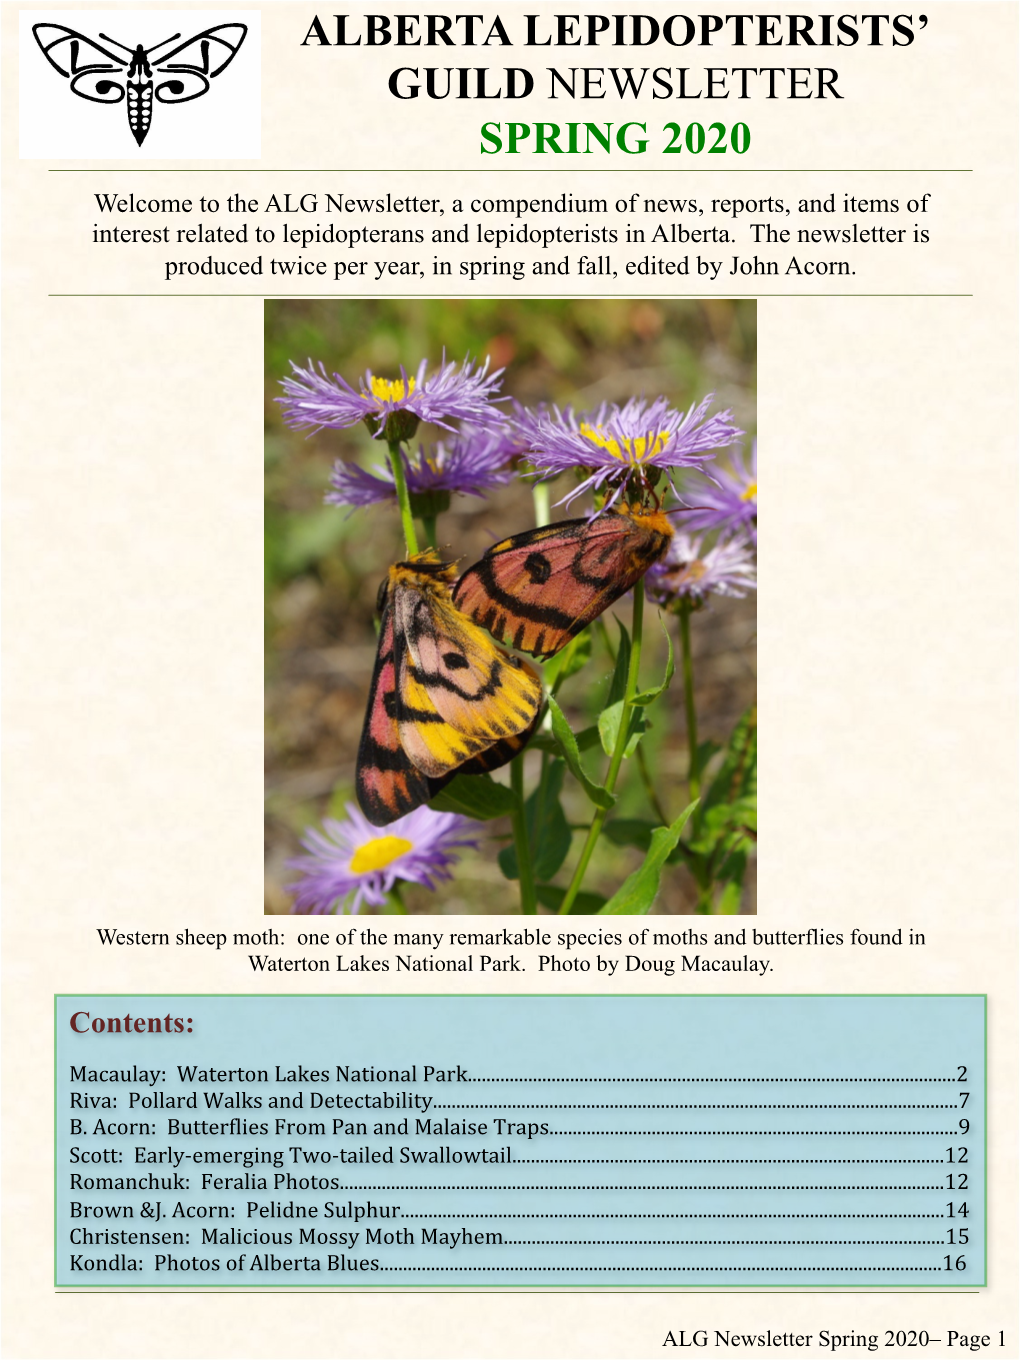 Alberta Lepidopterists' Guild Newsletter Spring 2020